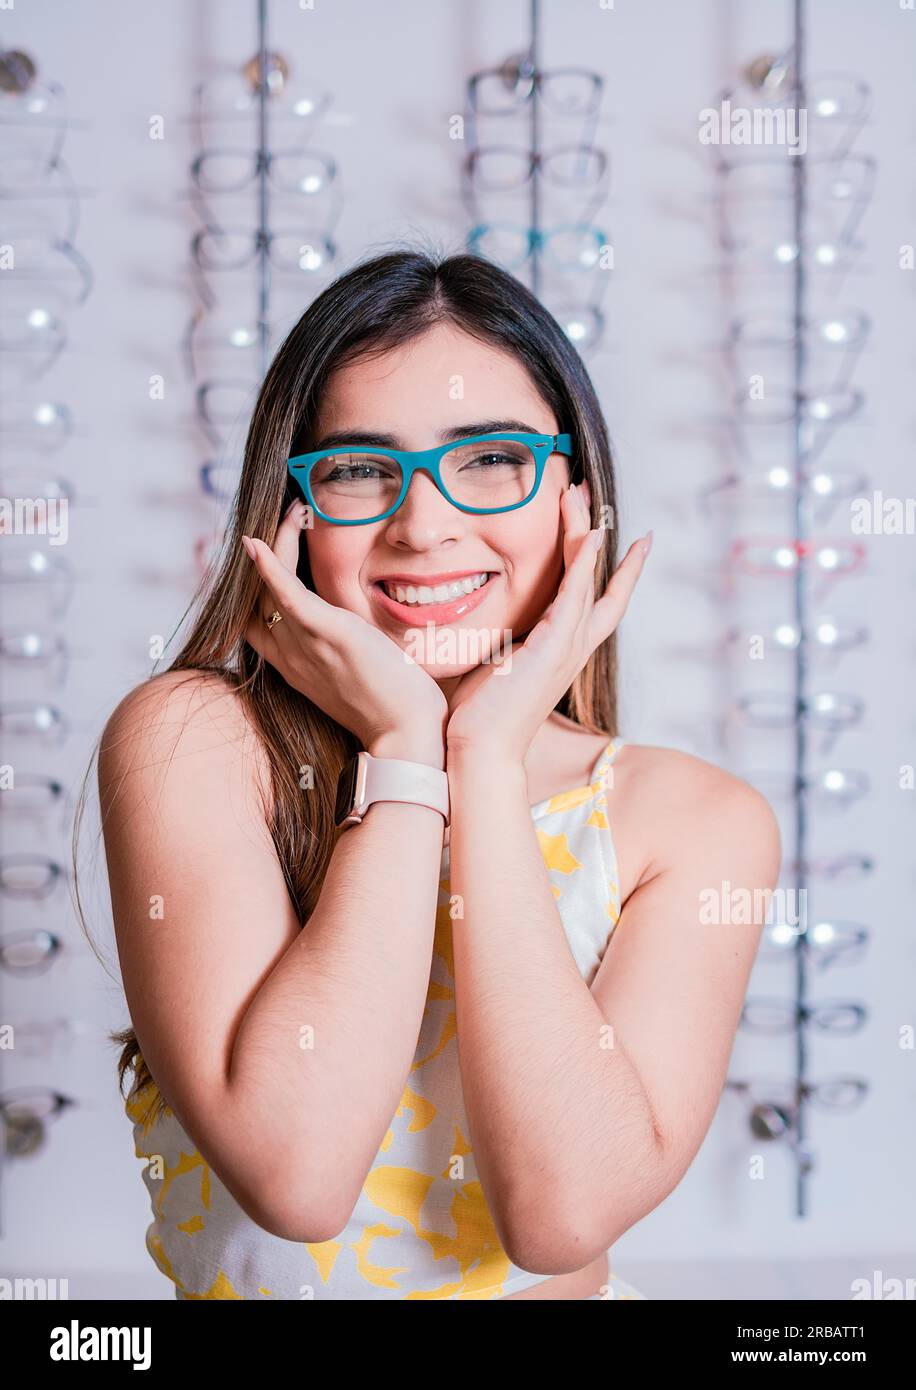 Portrait of a happy female customer wearing glasses in an eyewear store. Smiling girl wearing glasses in an eyeglass store Stock Photo